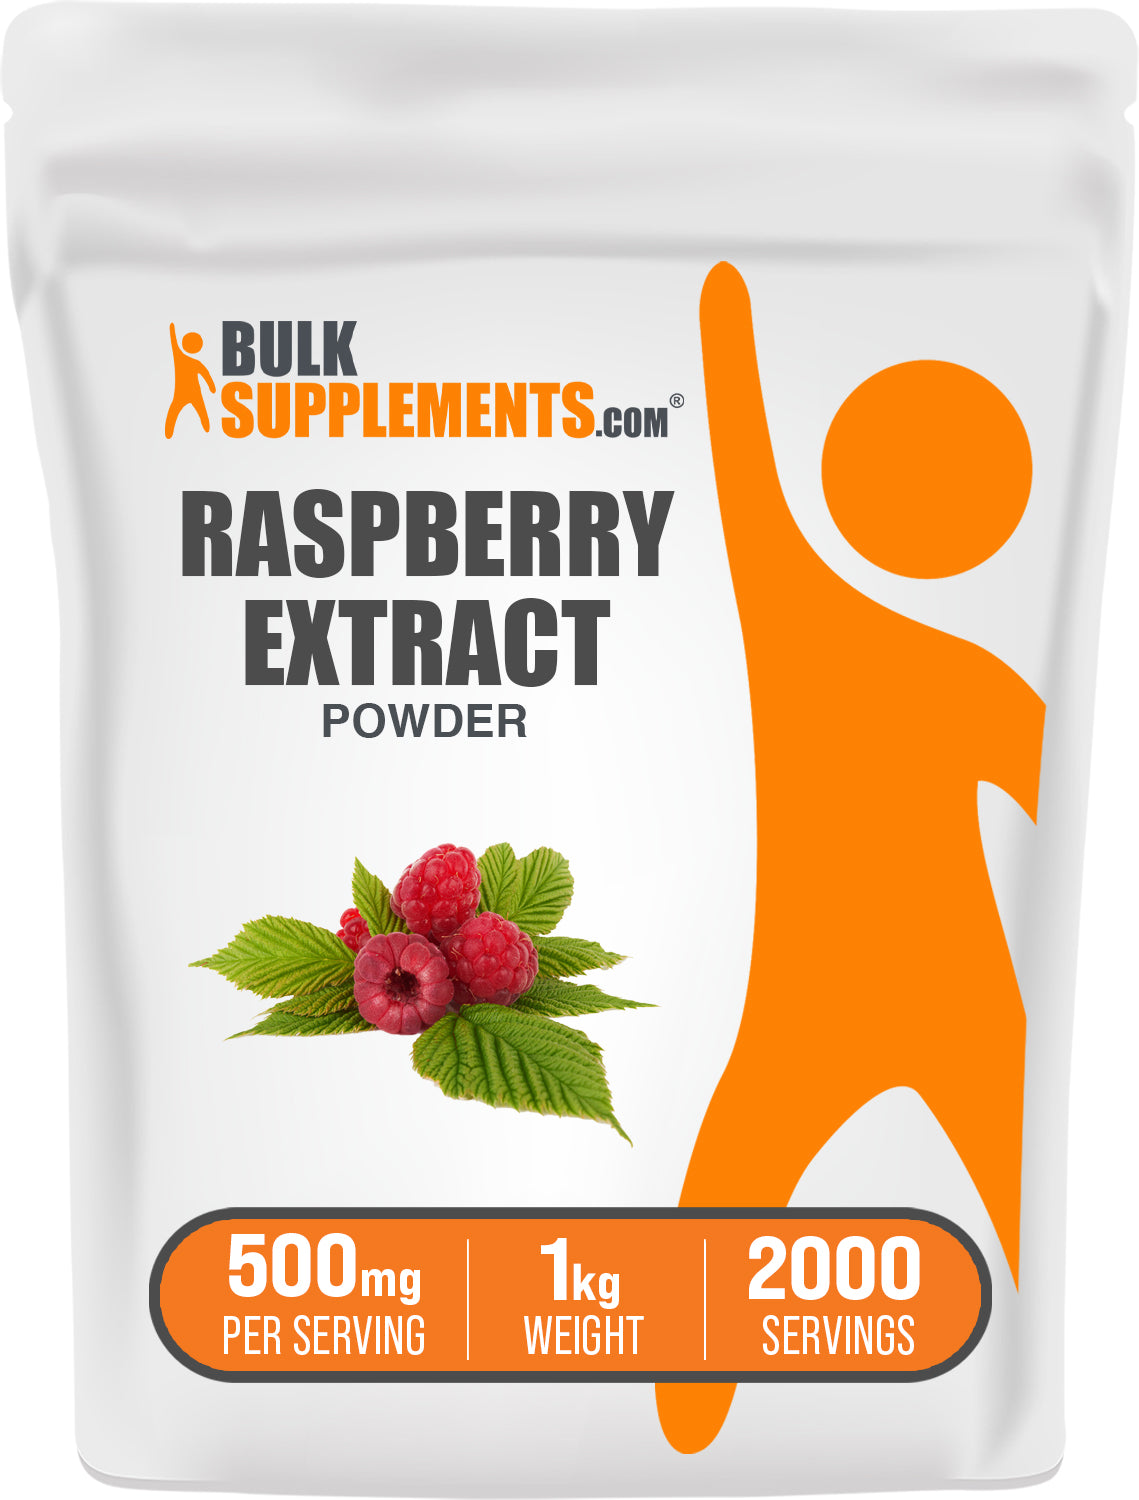 Raspberry Extract Powder 1kg bag